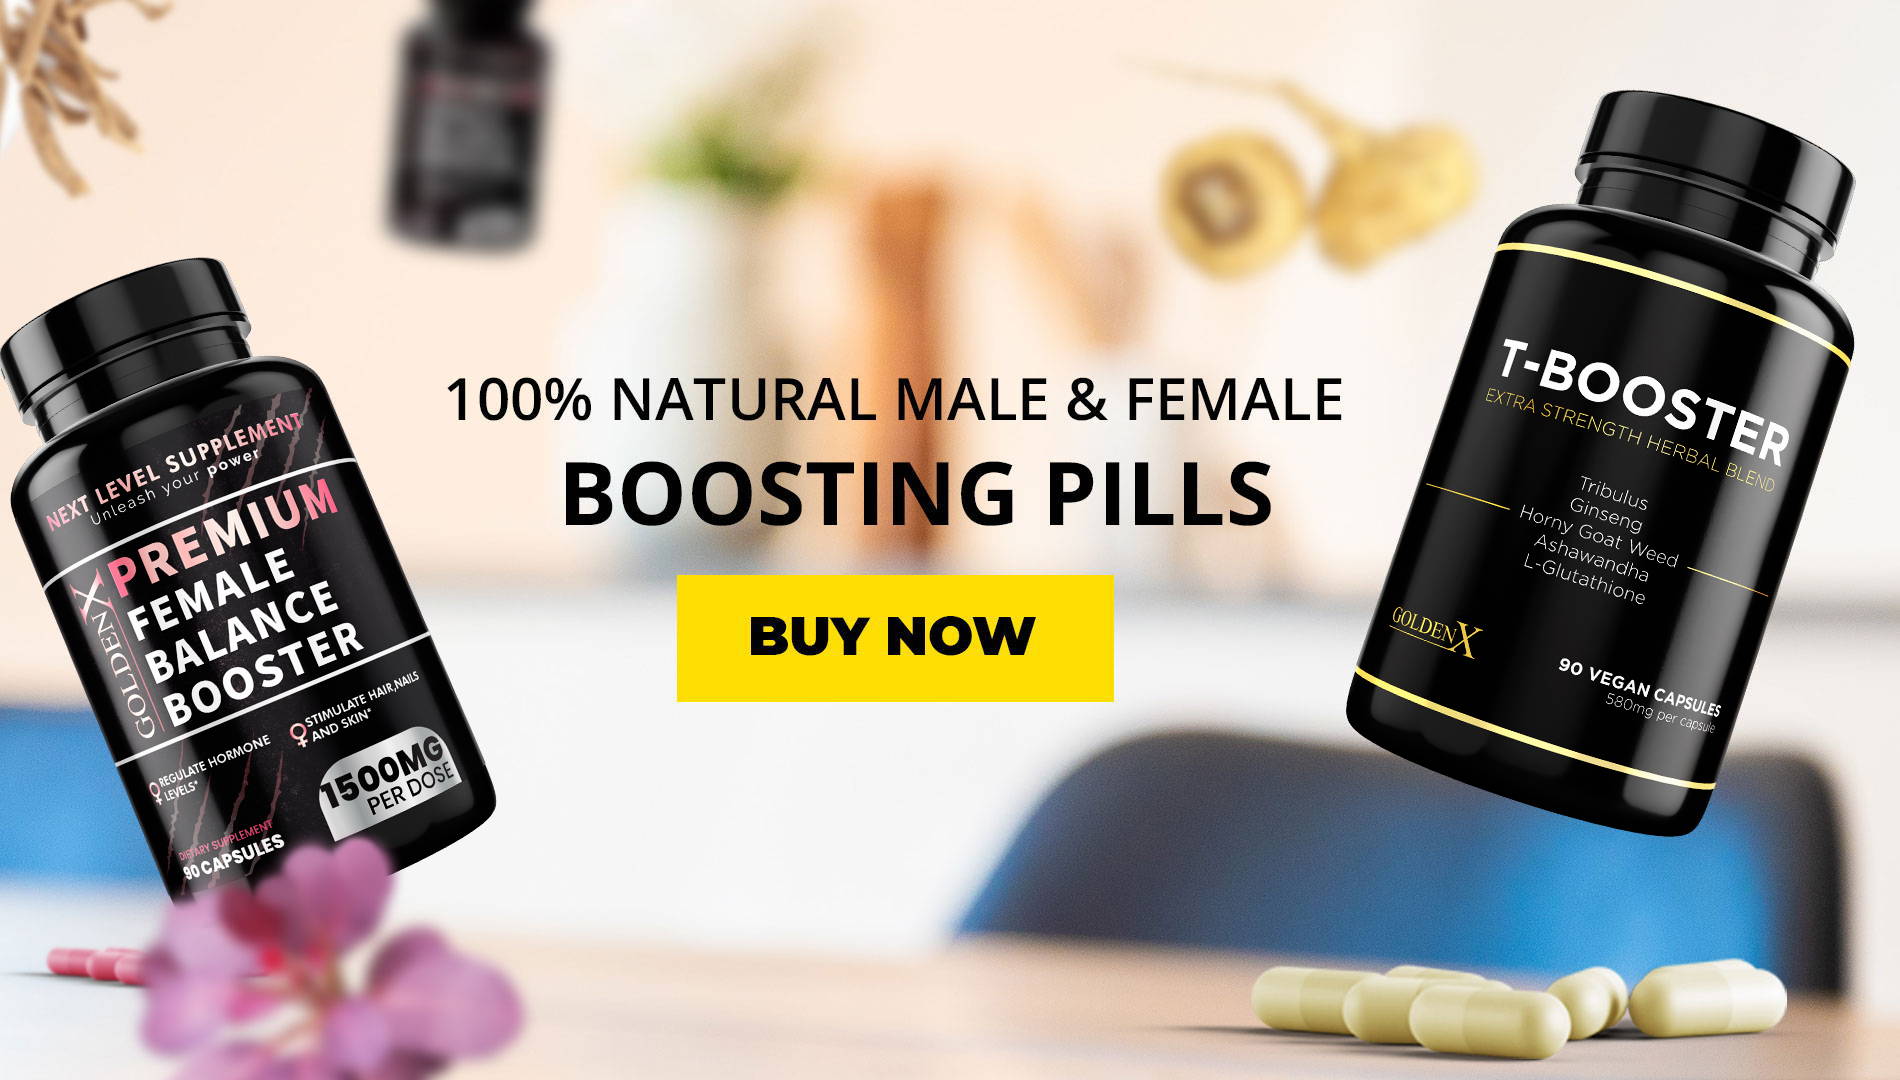 100% Natural Male & Female Boosting Pills